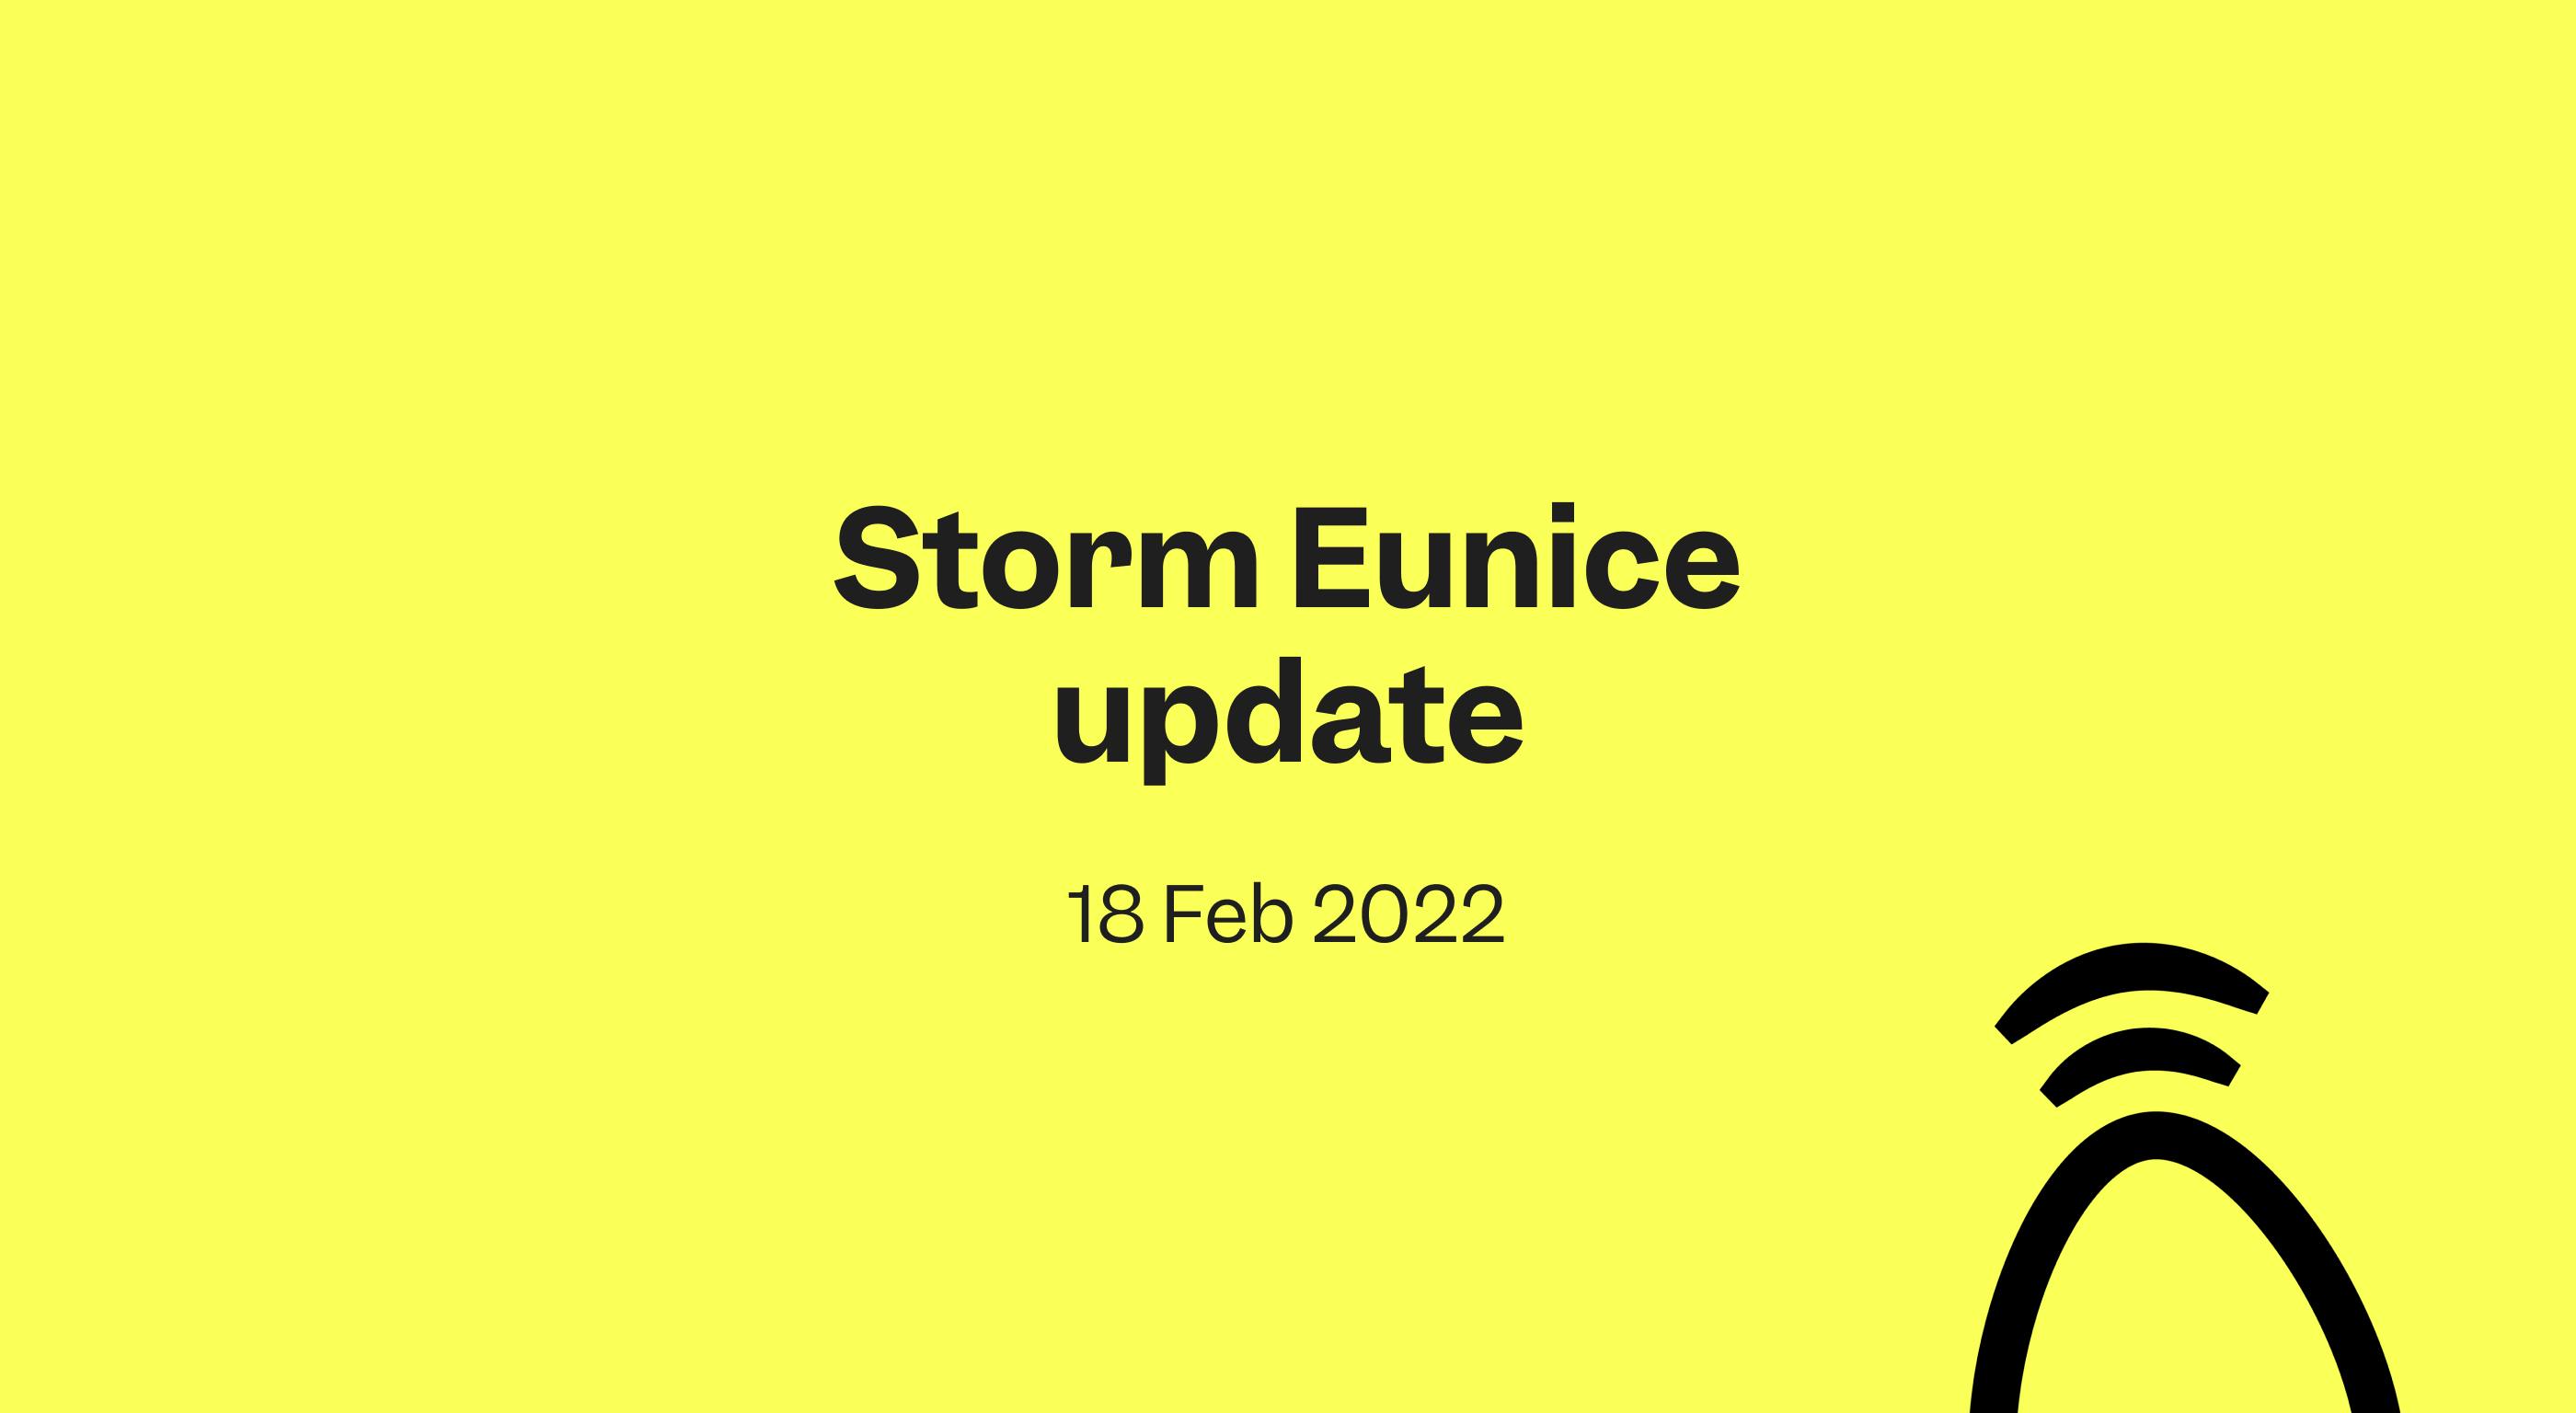 Storm Eunice update